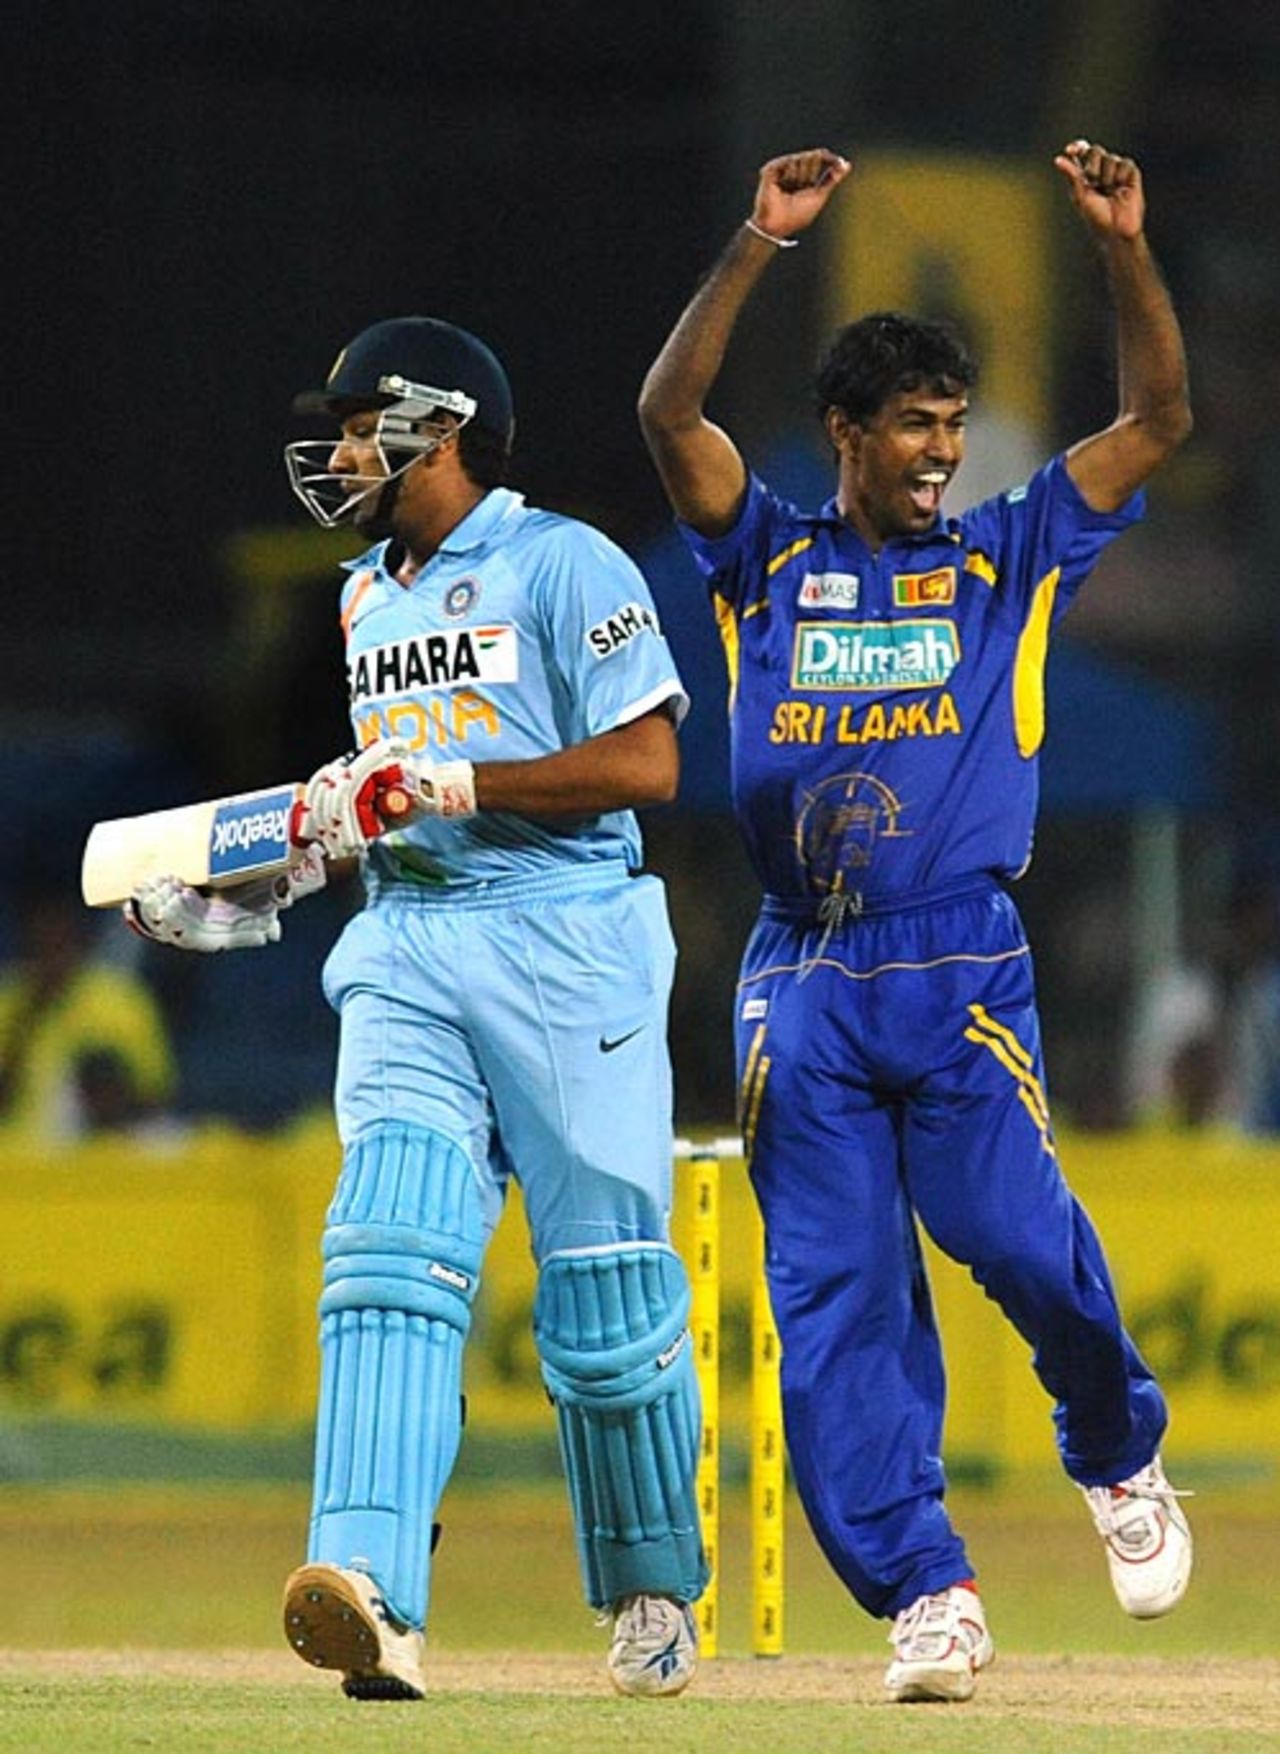 Nuwan Kulasekara goes wild with joy after getting Rohit Sharma's wicket, Sri Lanka v India, 5th ODI, Colombo, August 29, 2008 
